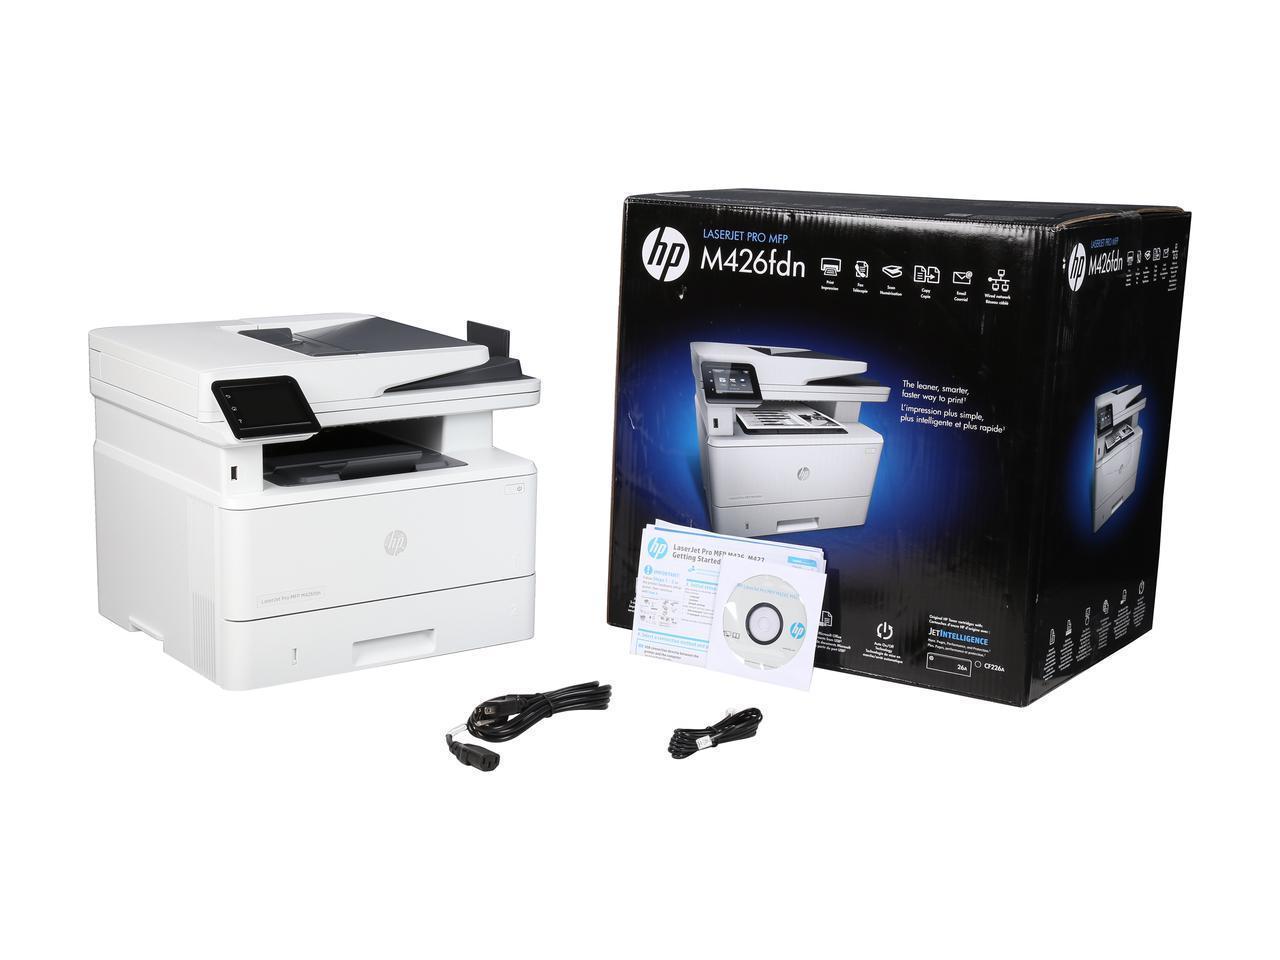 Renewed F6W14A HP LaserJet Pro M426fdn Multifunction Laser Printer with Built-in Ethernet & Duplex Printing